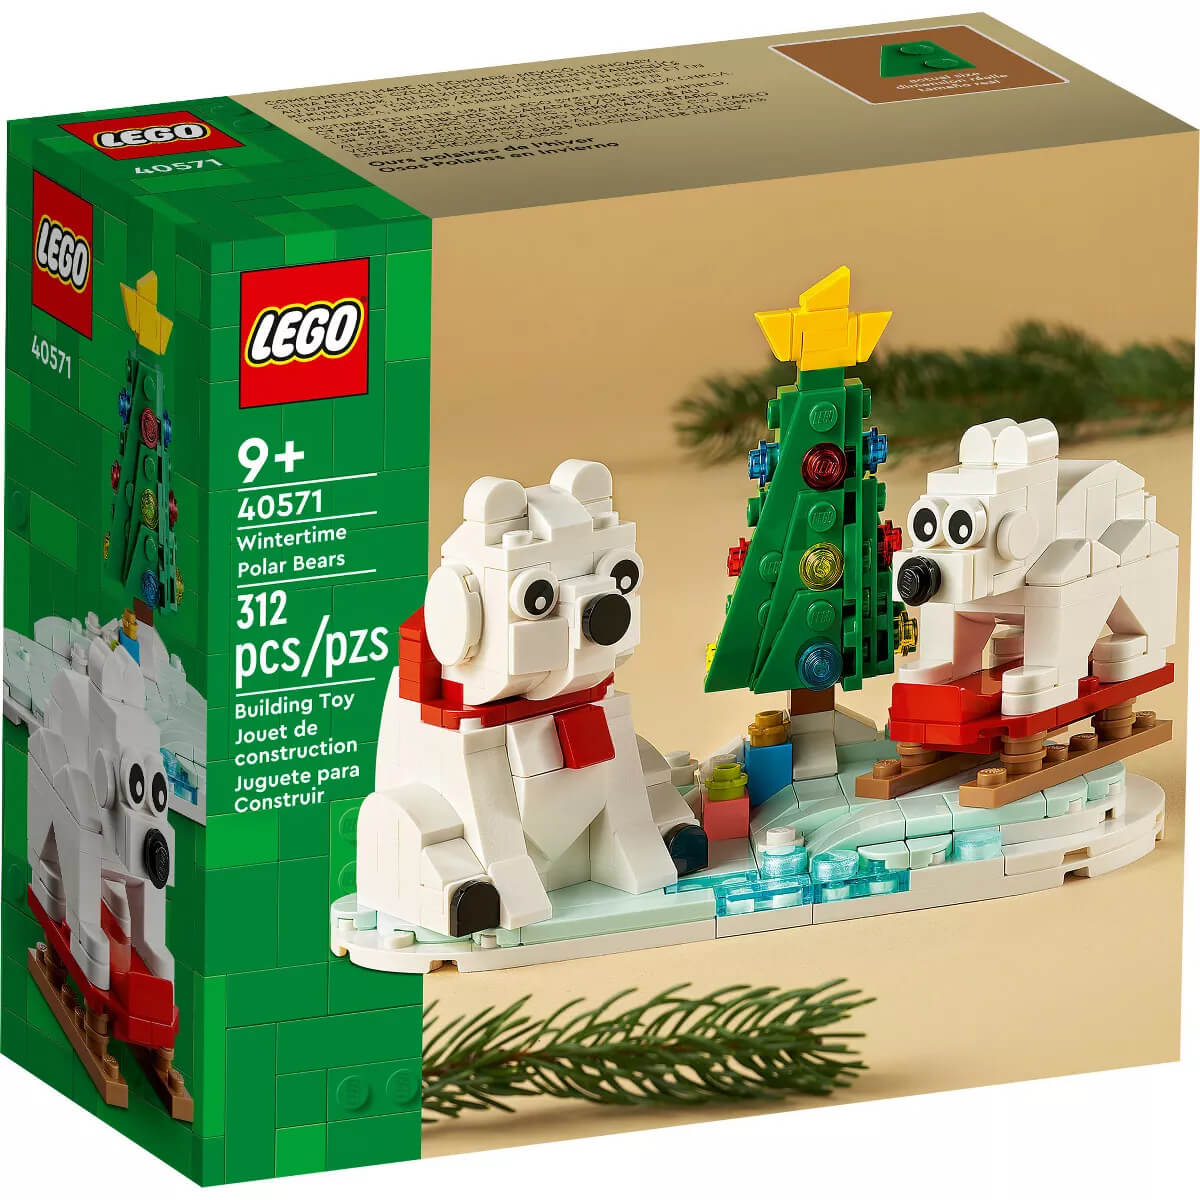 LEGO Wintertime Polar Bears 312 Piece Building Set (40571) front of the box